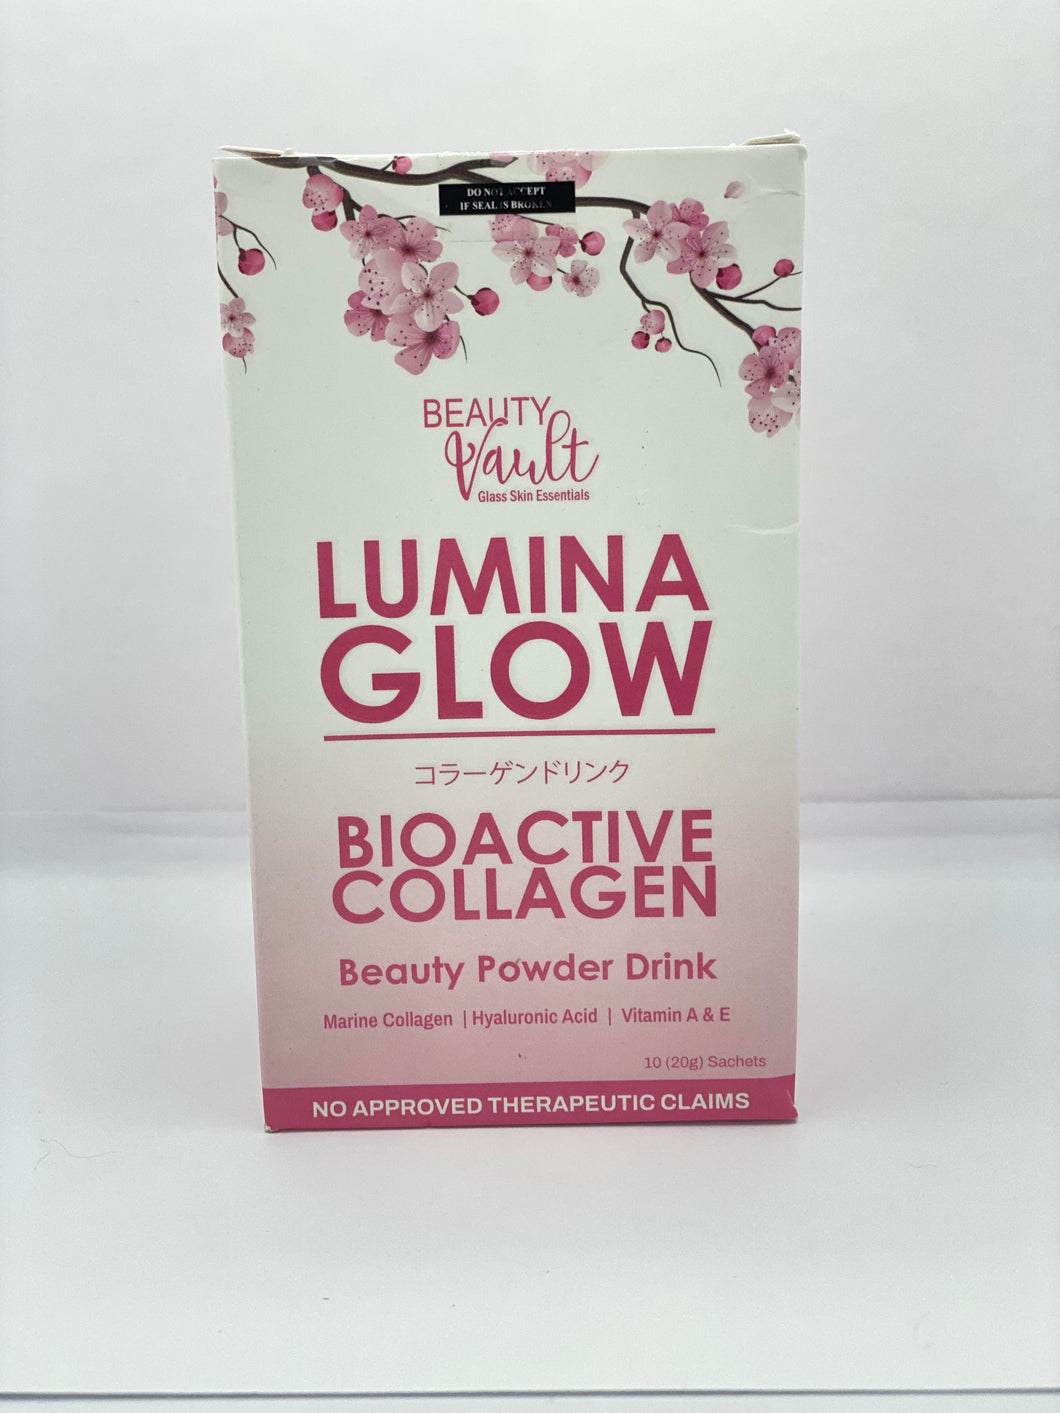 Beauty Vault Lumina Glow Bioactive Collagen 10 Sachet